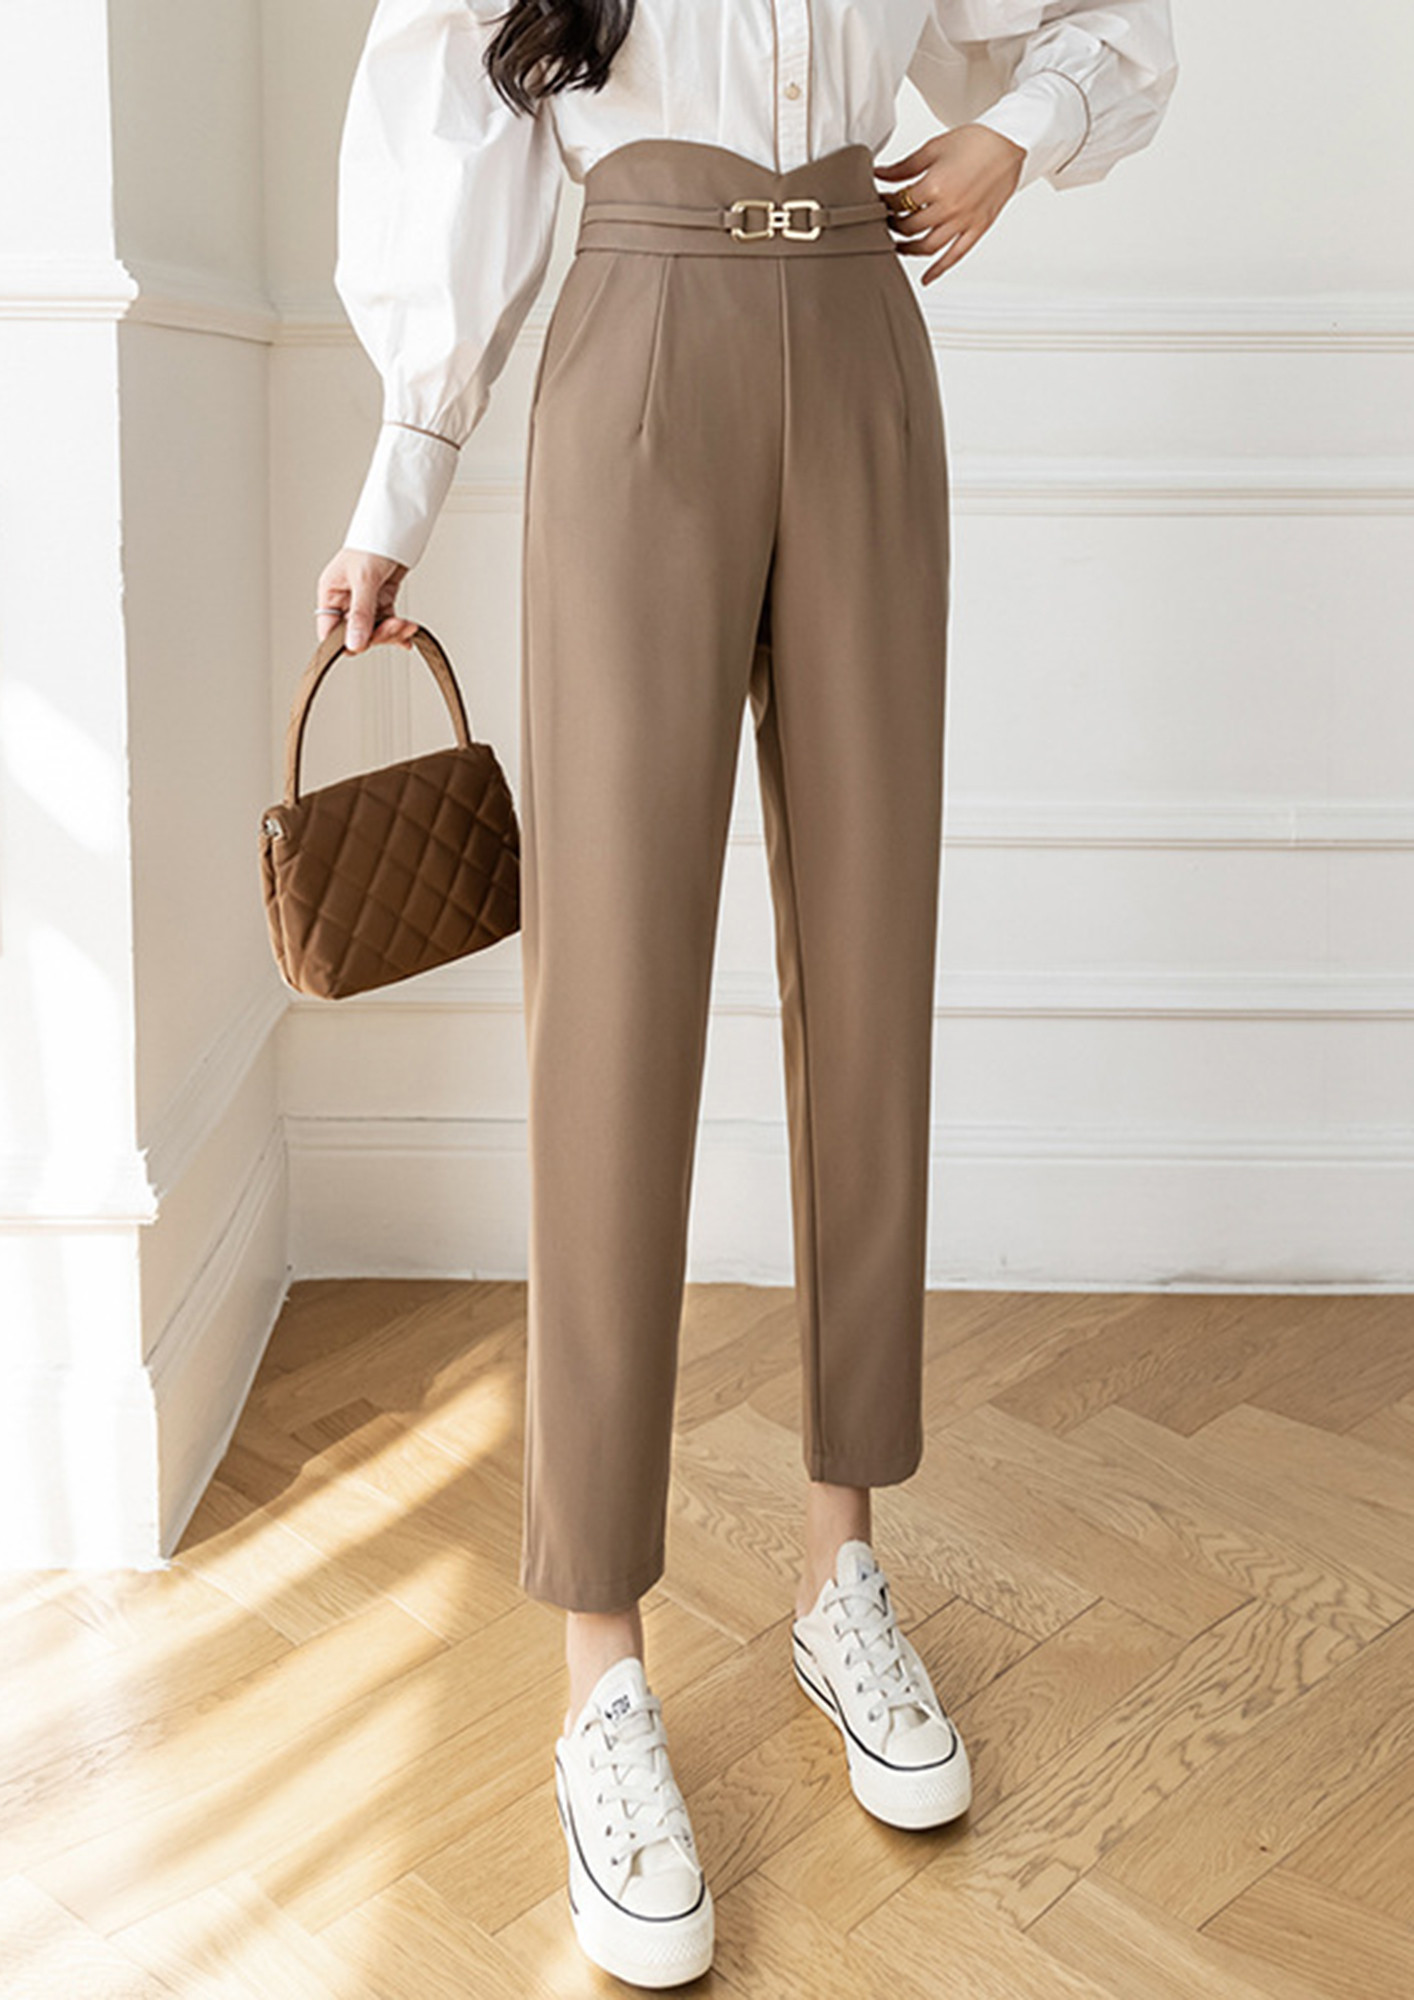 Buy Louis Philippe Dark Brown Slim Fit Striped Trousers for Mens Online @  Tata CLiQ